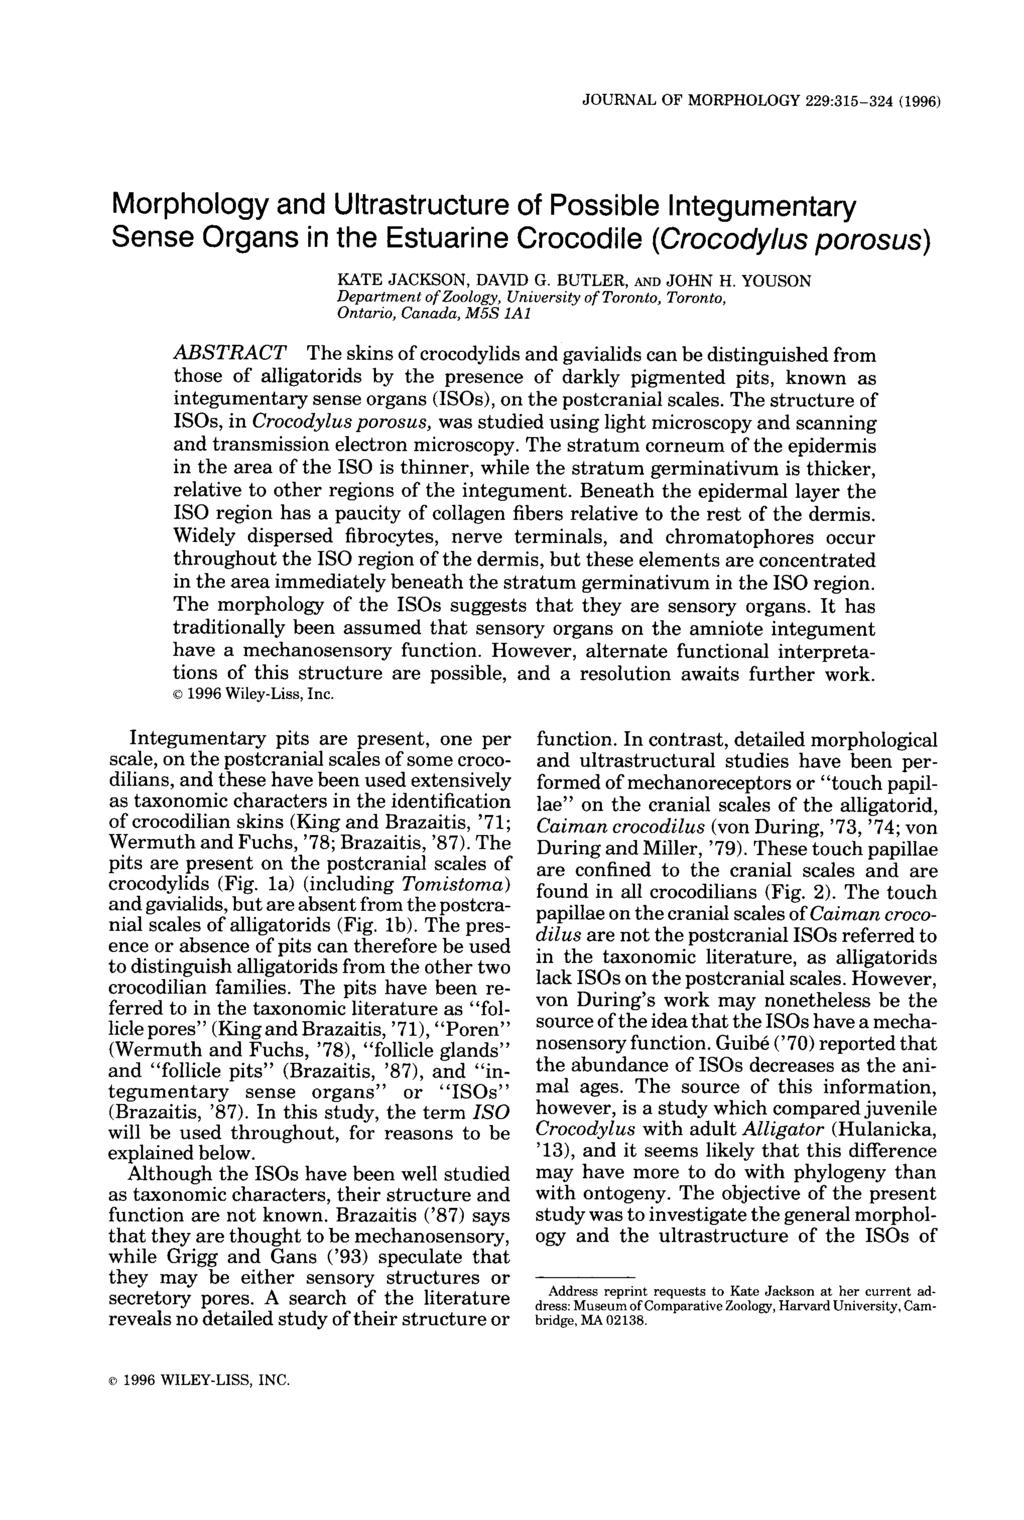 JOURNAL OF MORPHOLOGY 229:315-324 (1996) Morphology and Ultrastructure of Possible Integumentary Sense Organs in the Estuarine Crocodile (Crocodylus porosus) KATE JACKSON, DAVID G. BUTLER, AND JOHN H.